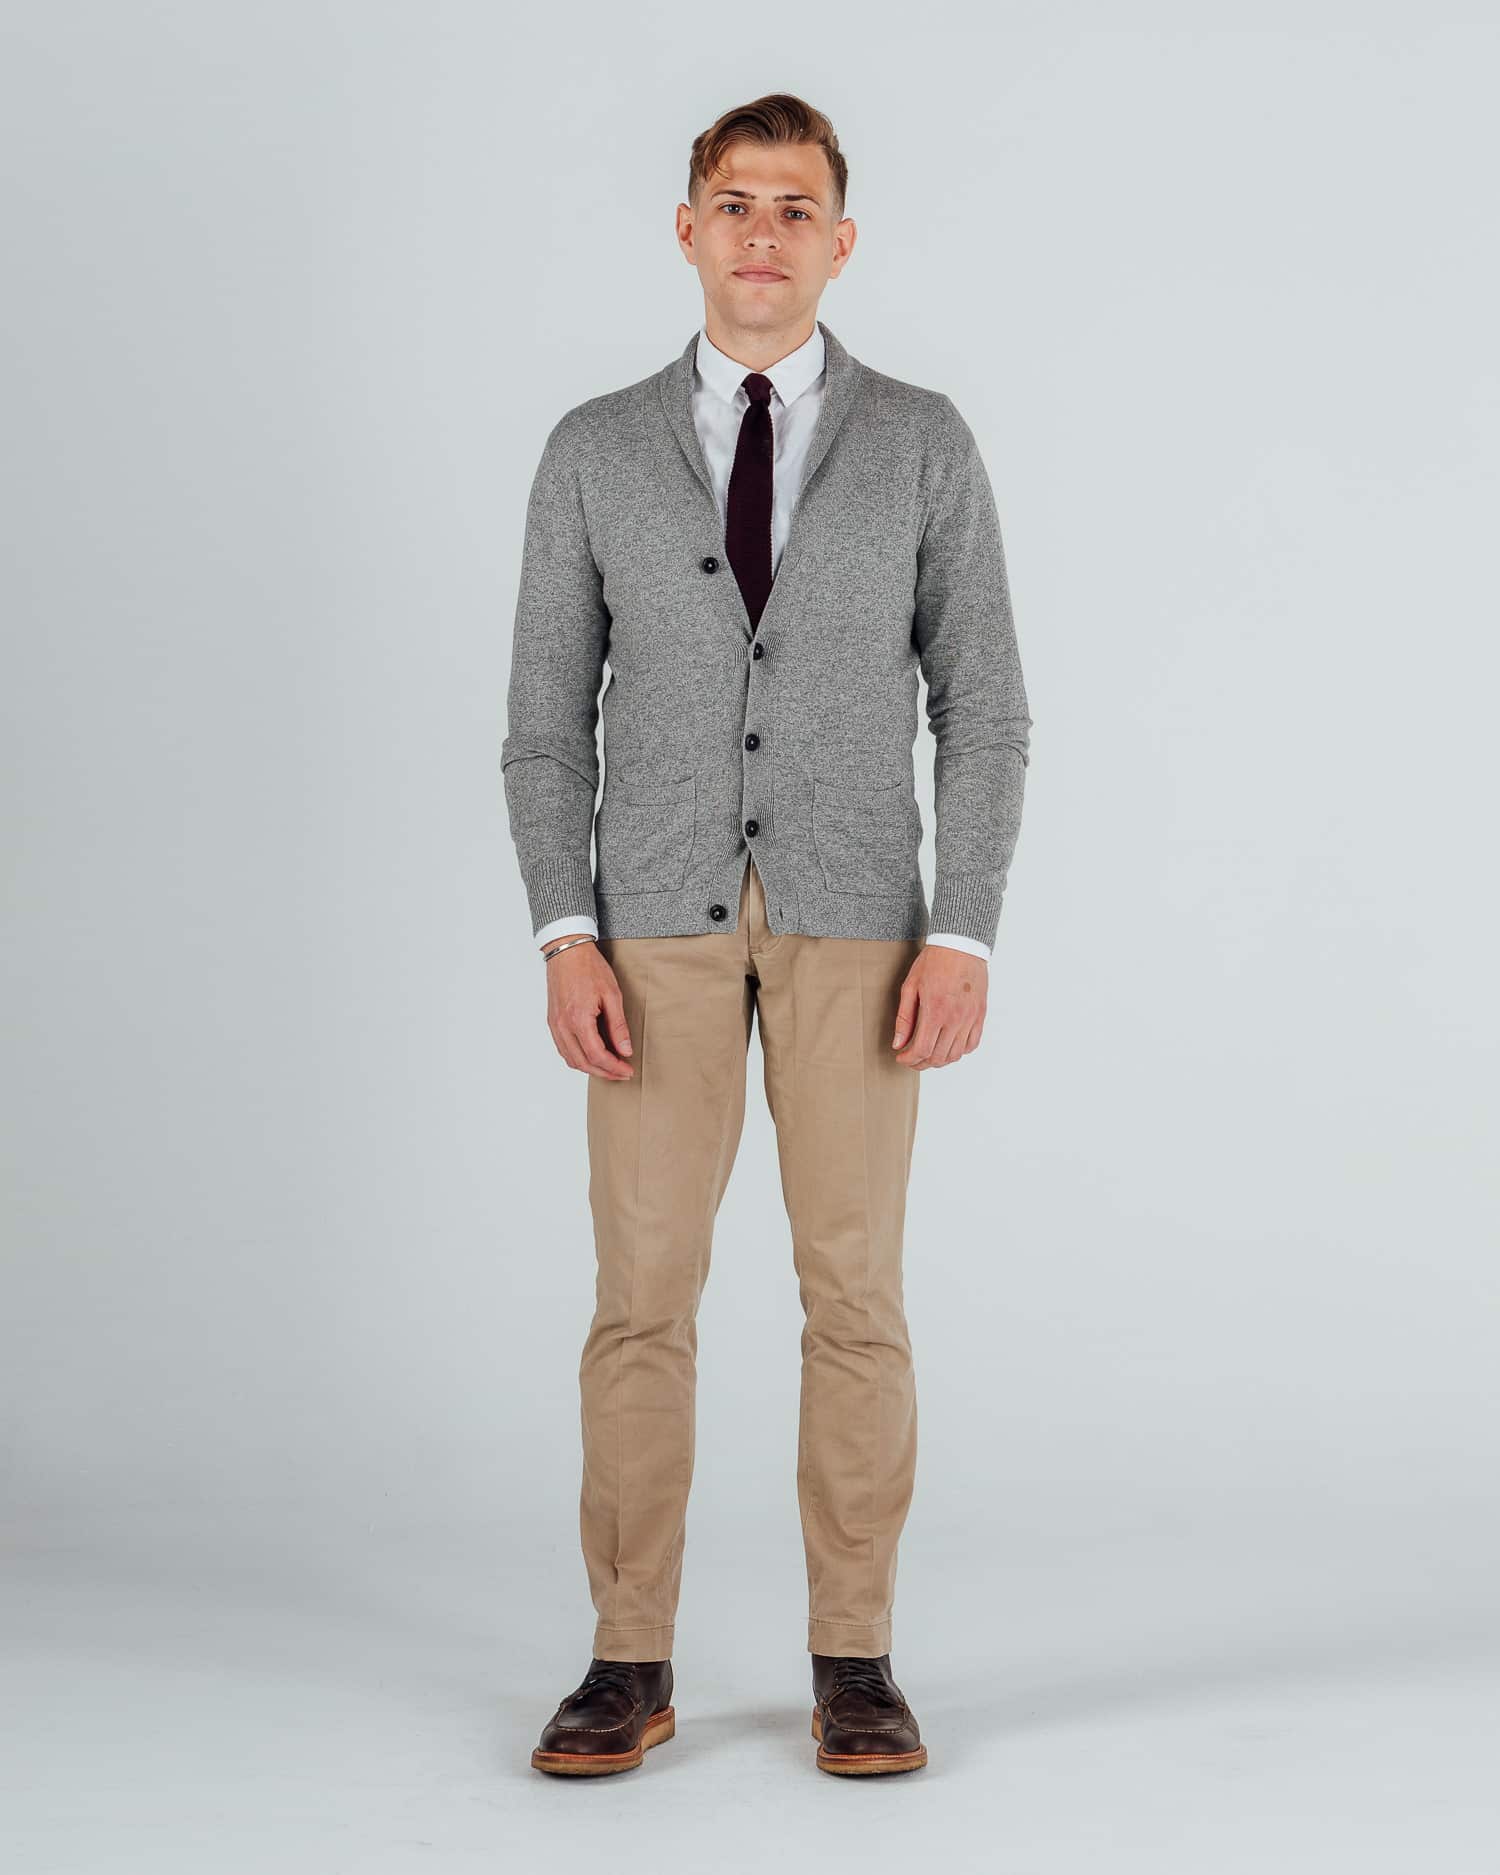 Gray Blazer with Light Gray Chino Pants